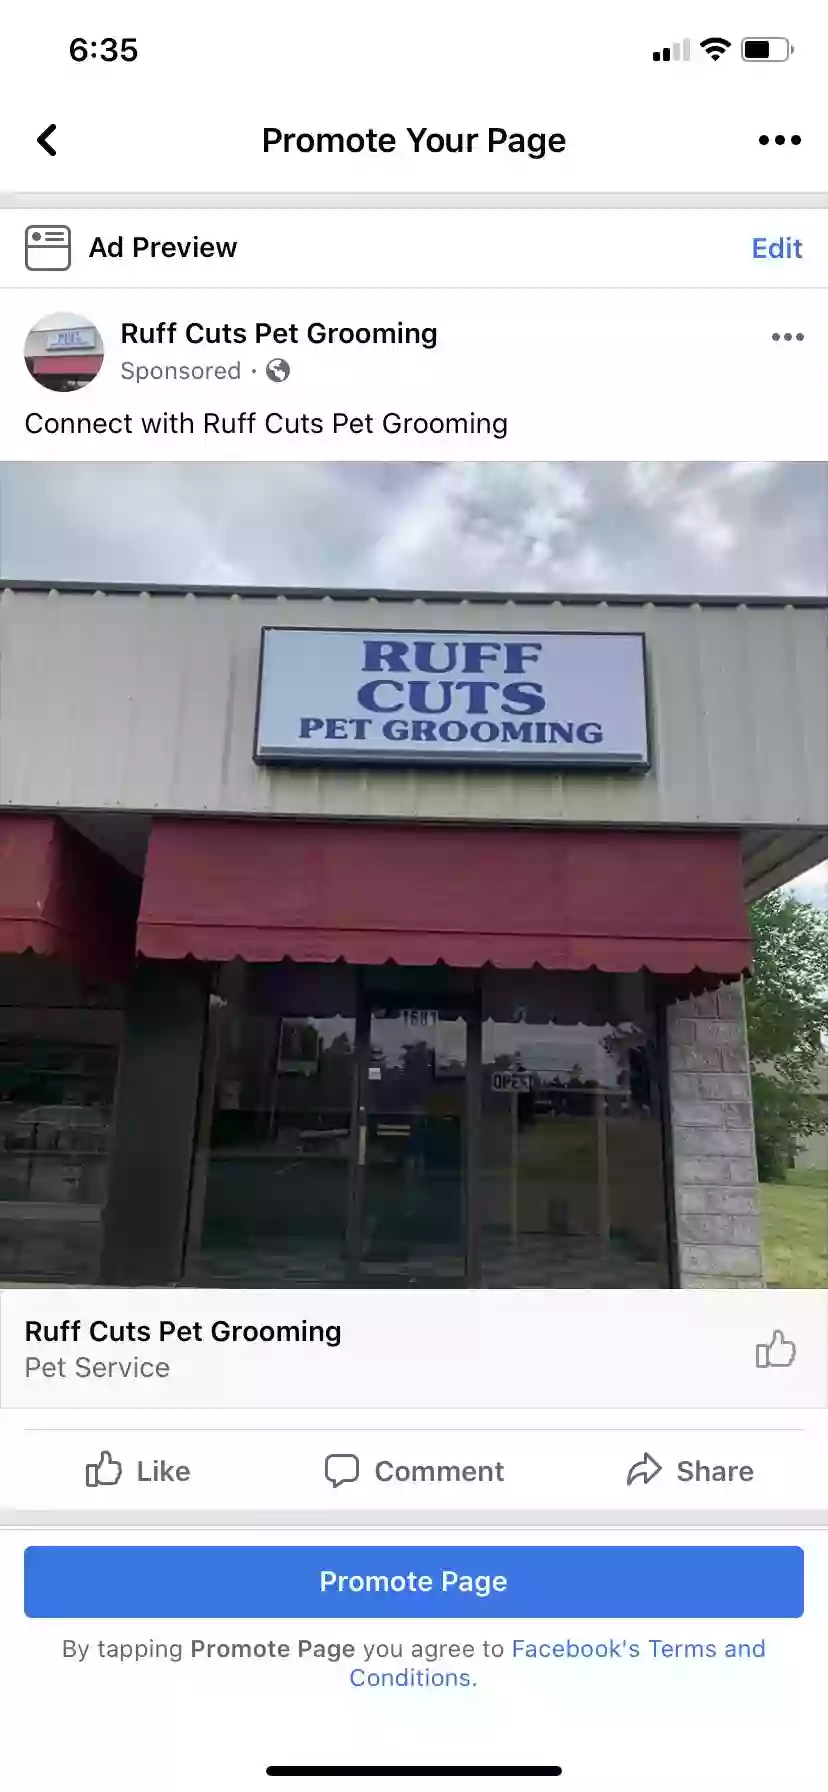 Ruff Cuts Pet Grooming